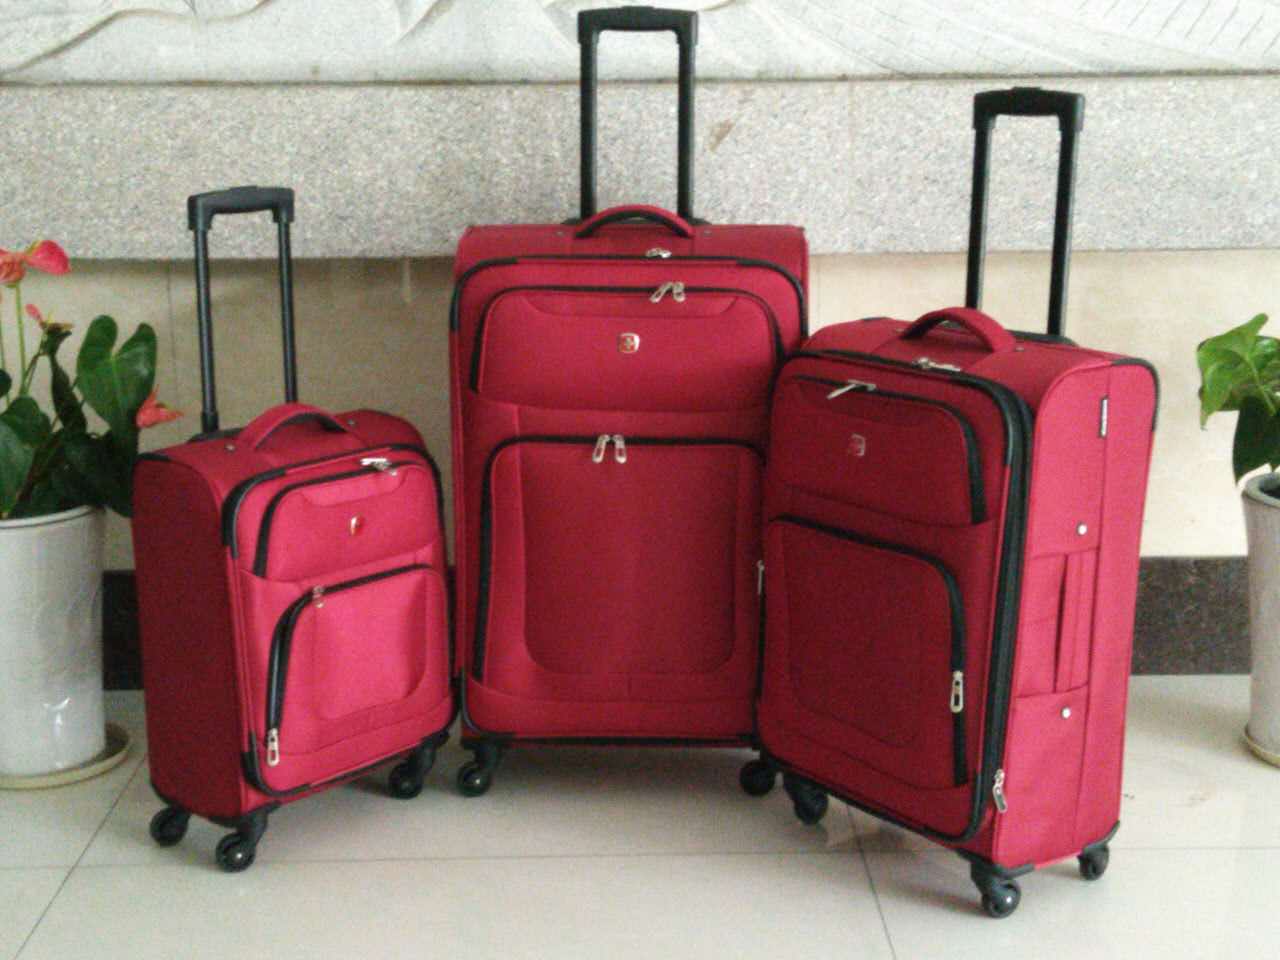 Yanteng fabric 3pcs luggage set with spinner wheels 